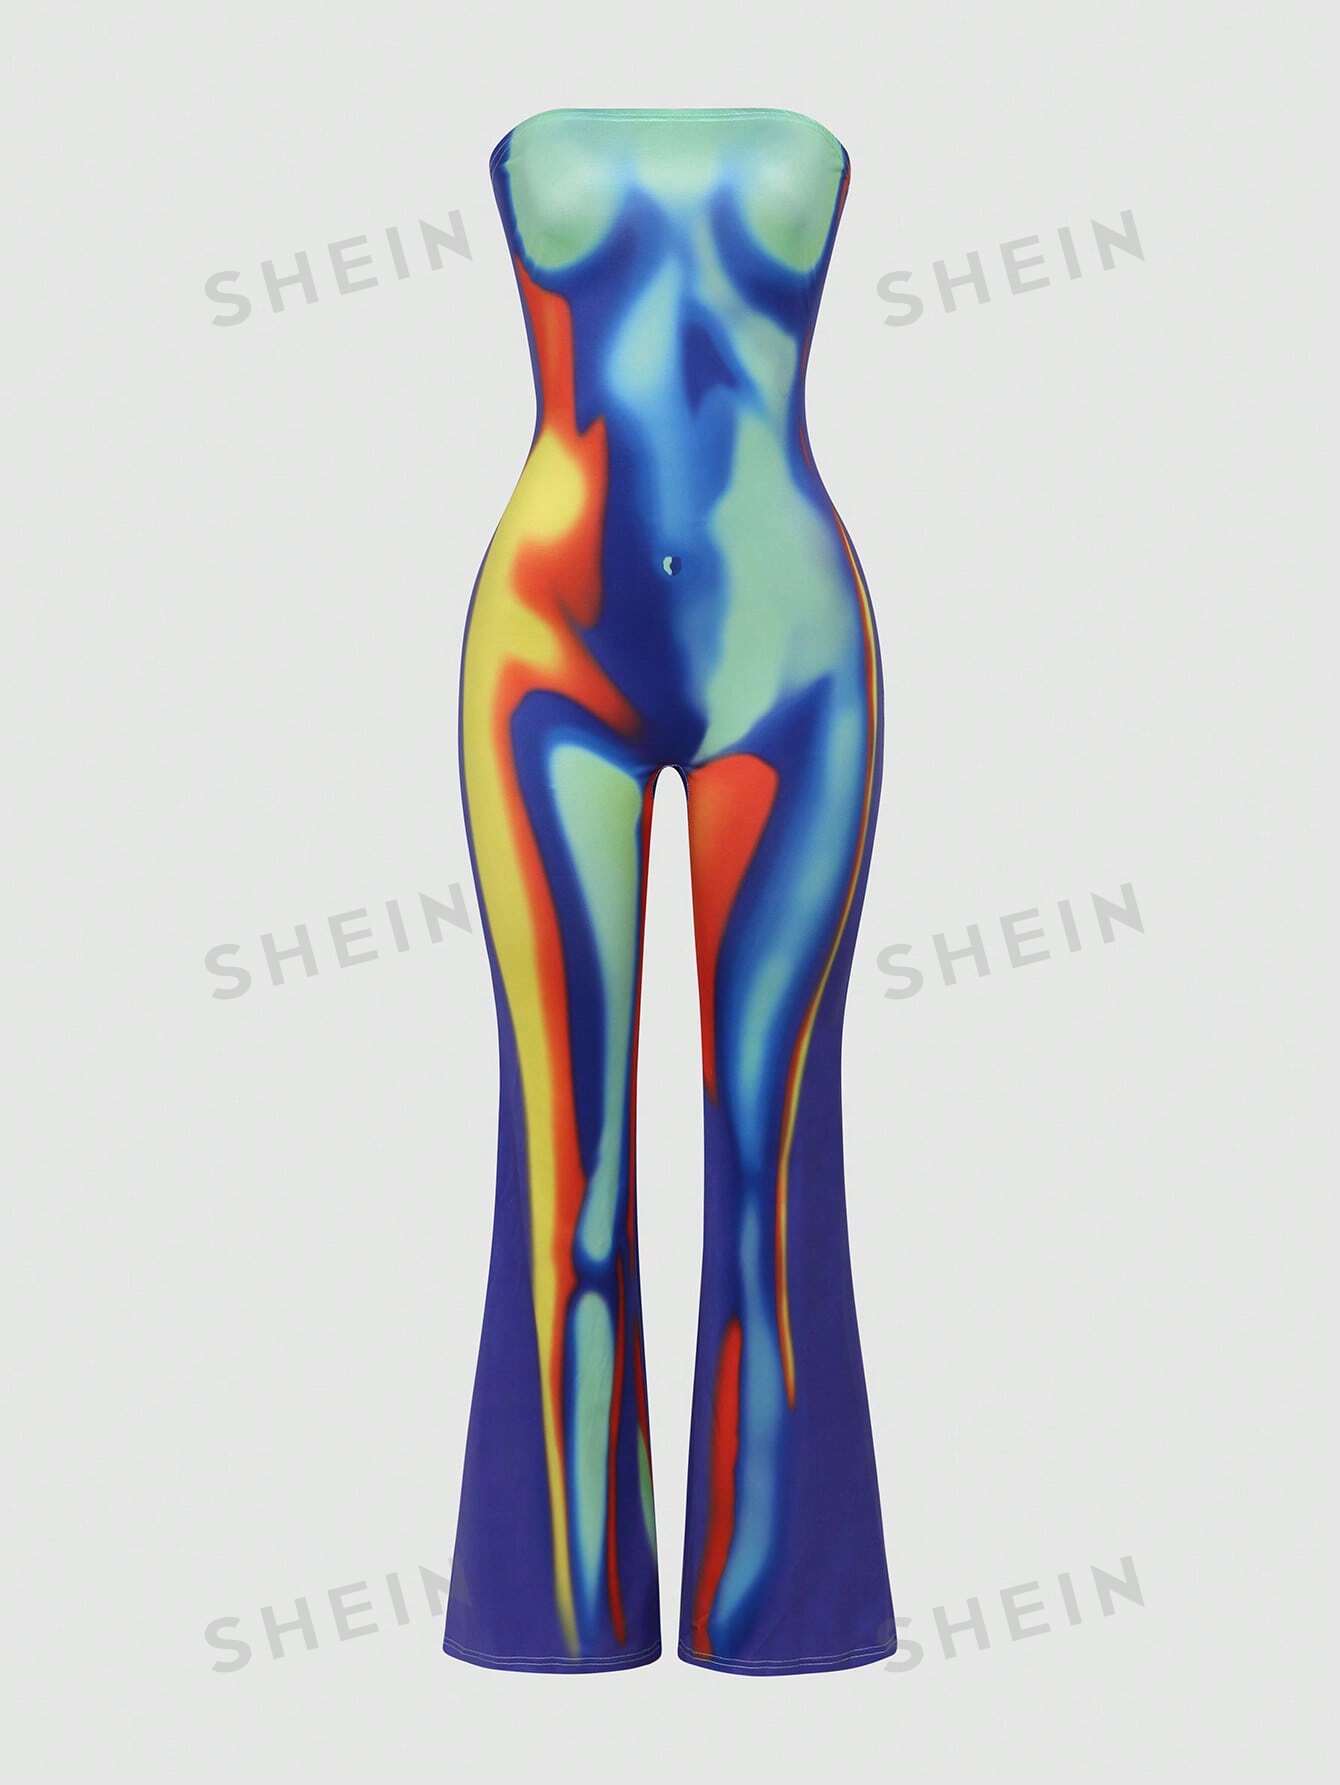 SHEIN ICON Женский комбинезон-бандо с принтом, облегающий крой, многоцветный shein icon женский комбинезон бандо с принтом облегающий крой многоцветный